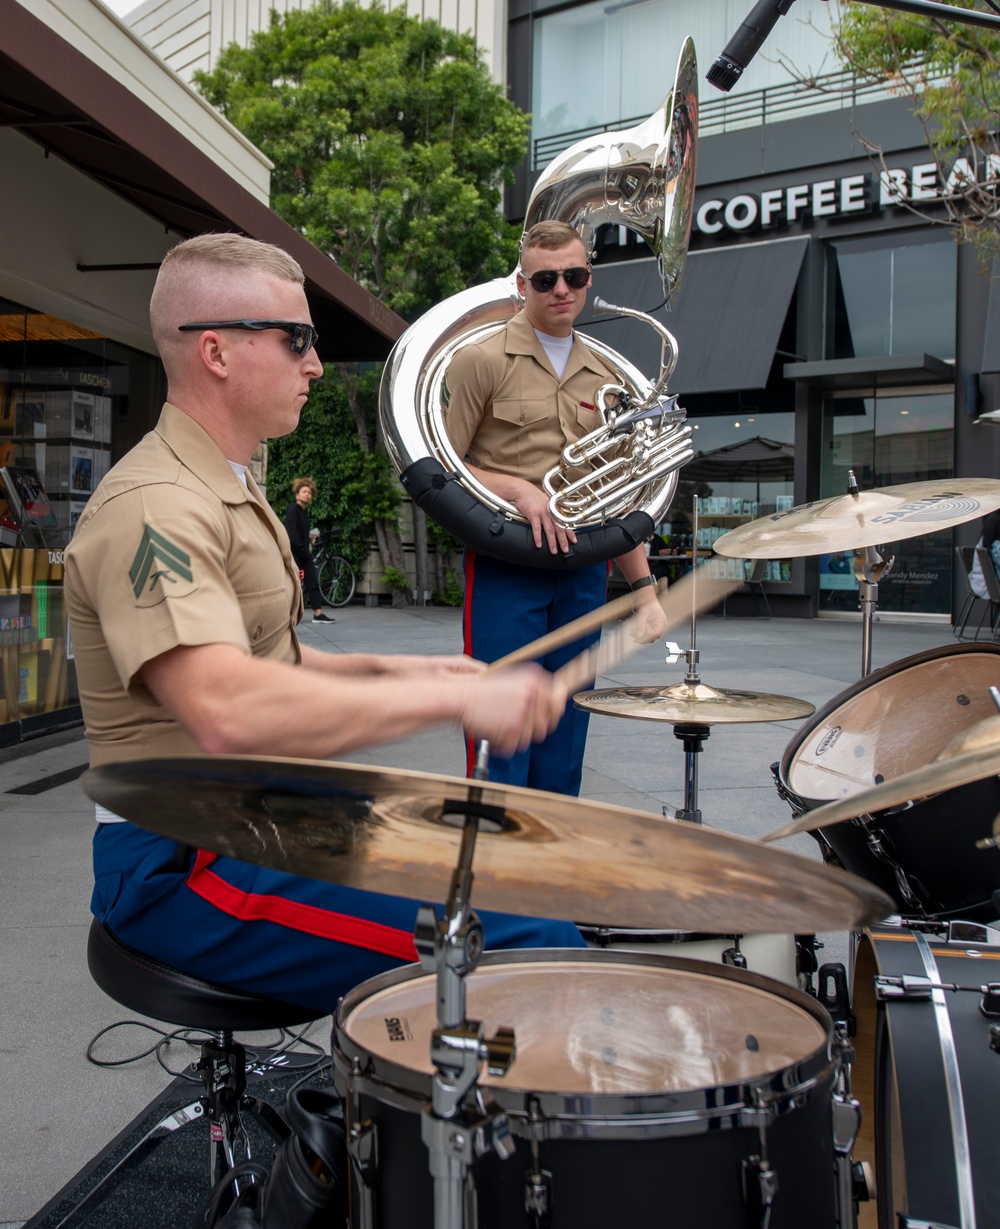 Marine Band Southwest performs during fleet week